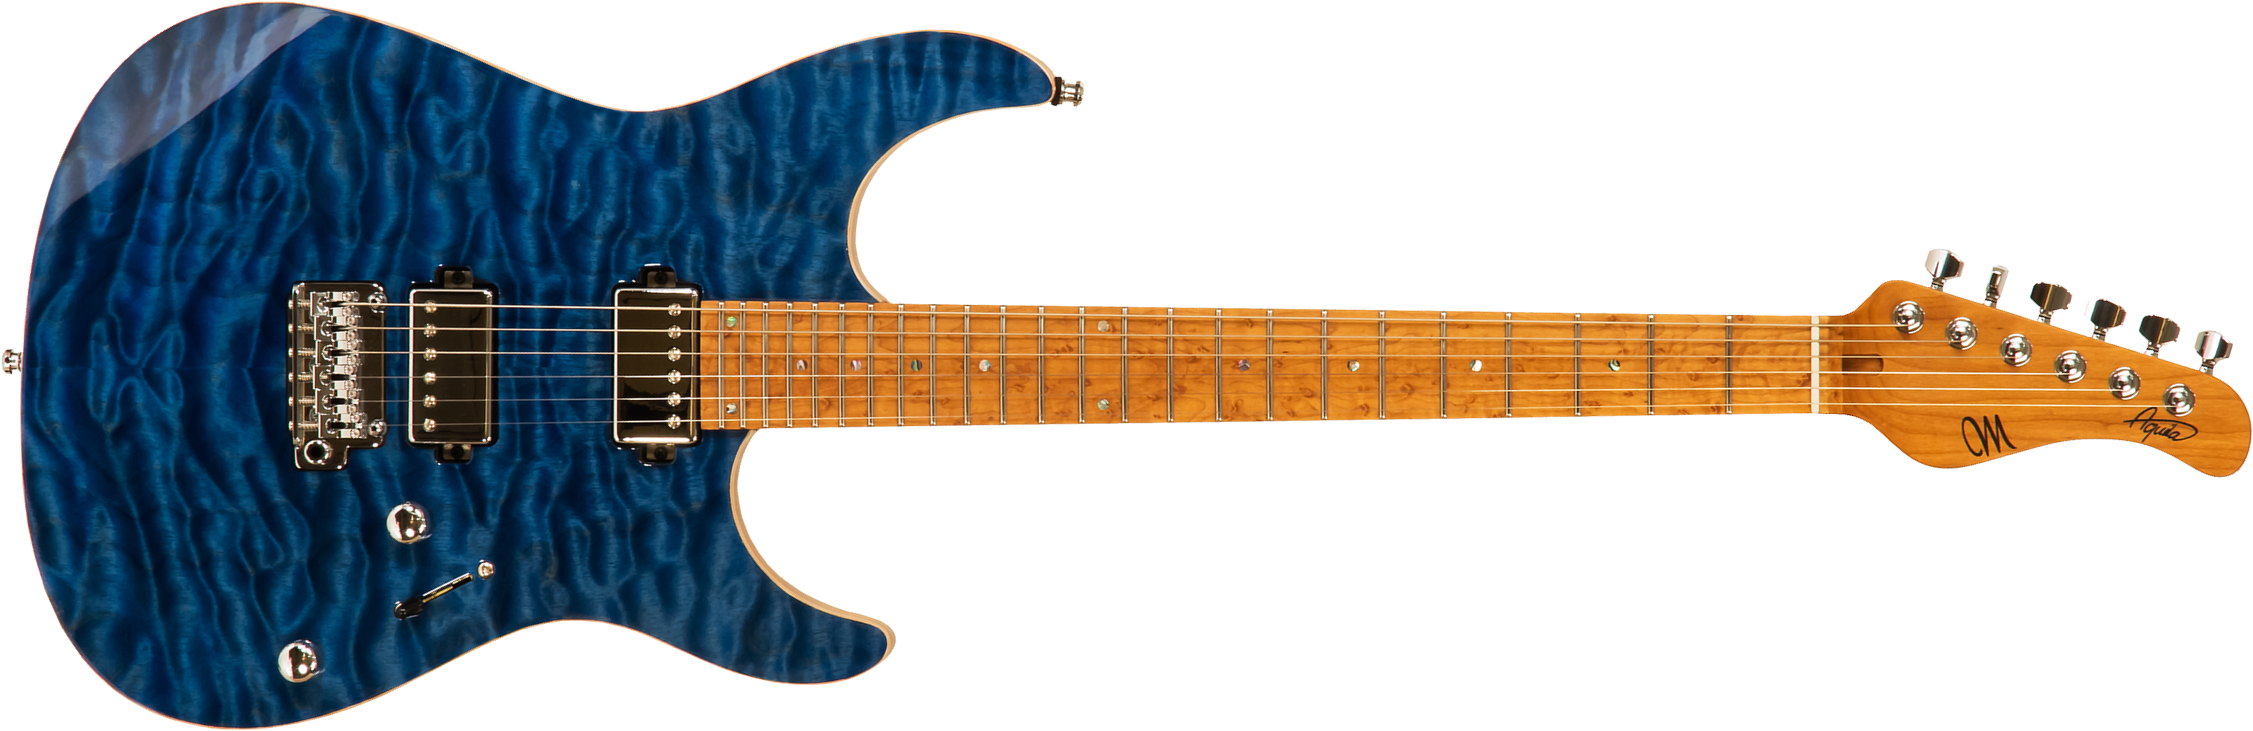 Mayones Guitars Aquila Elite S 6 40th Anniversary 2h Trem Mn #aq2204194 - Trans Blue Gloss - E-Gitarre in Str-Form - Main picture